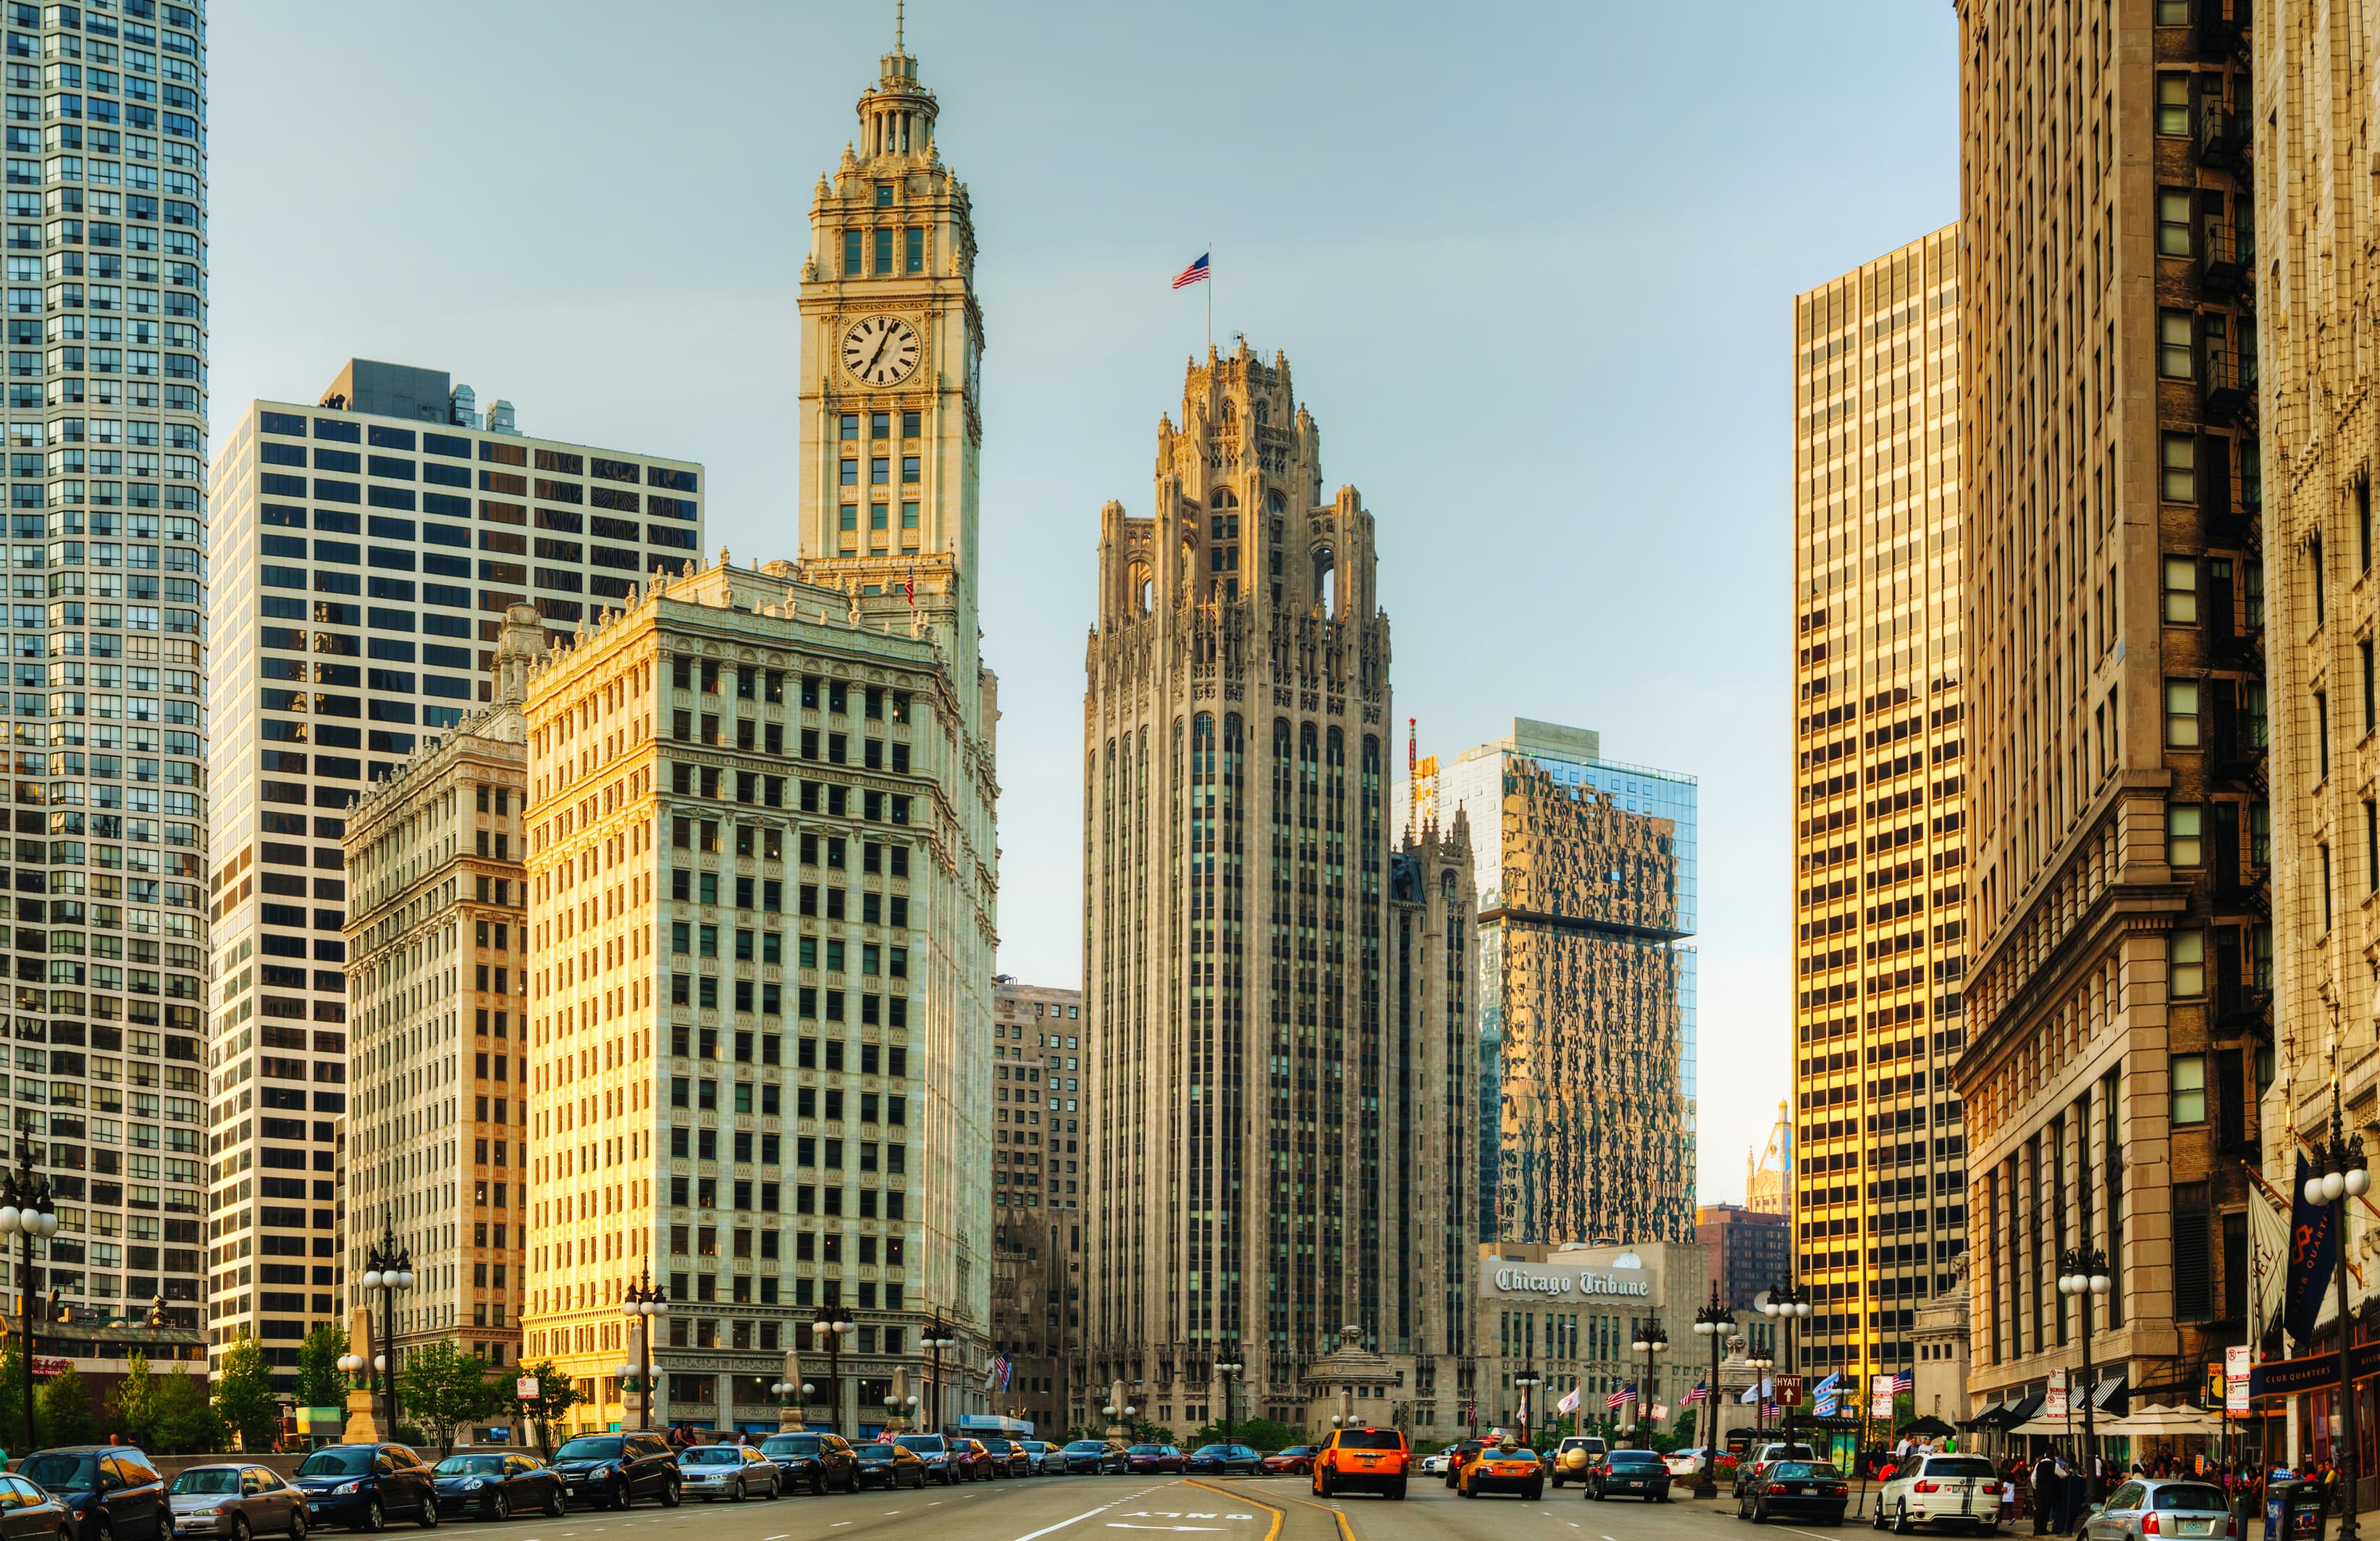 downtown, Chicago, Illinois, Wrigley Building, skyscraper, Michigan Avenue, Tribune Tower, Magnificent Mile